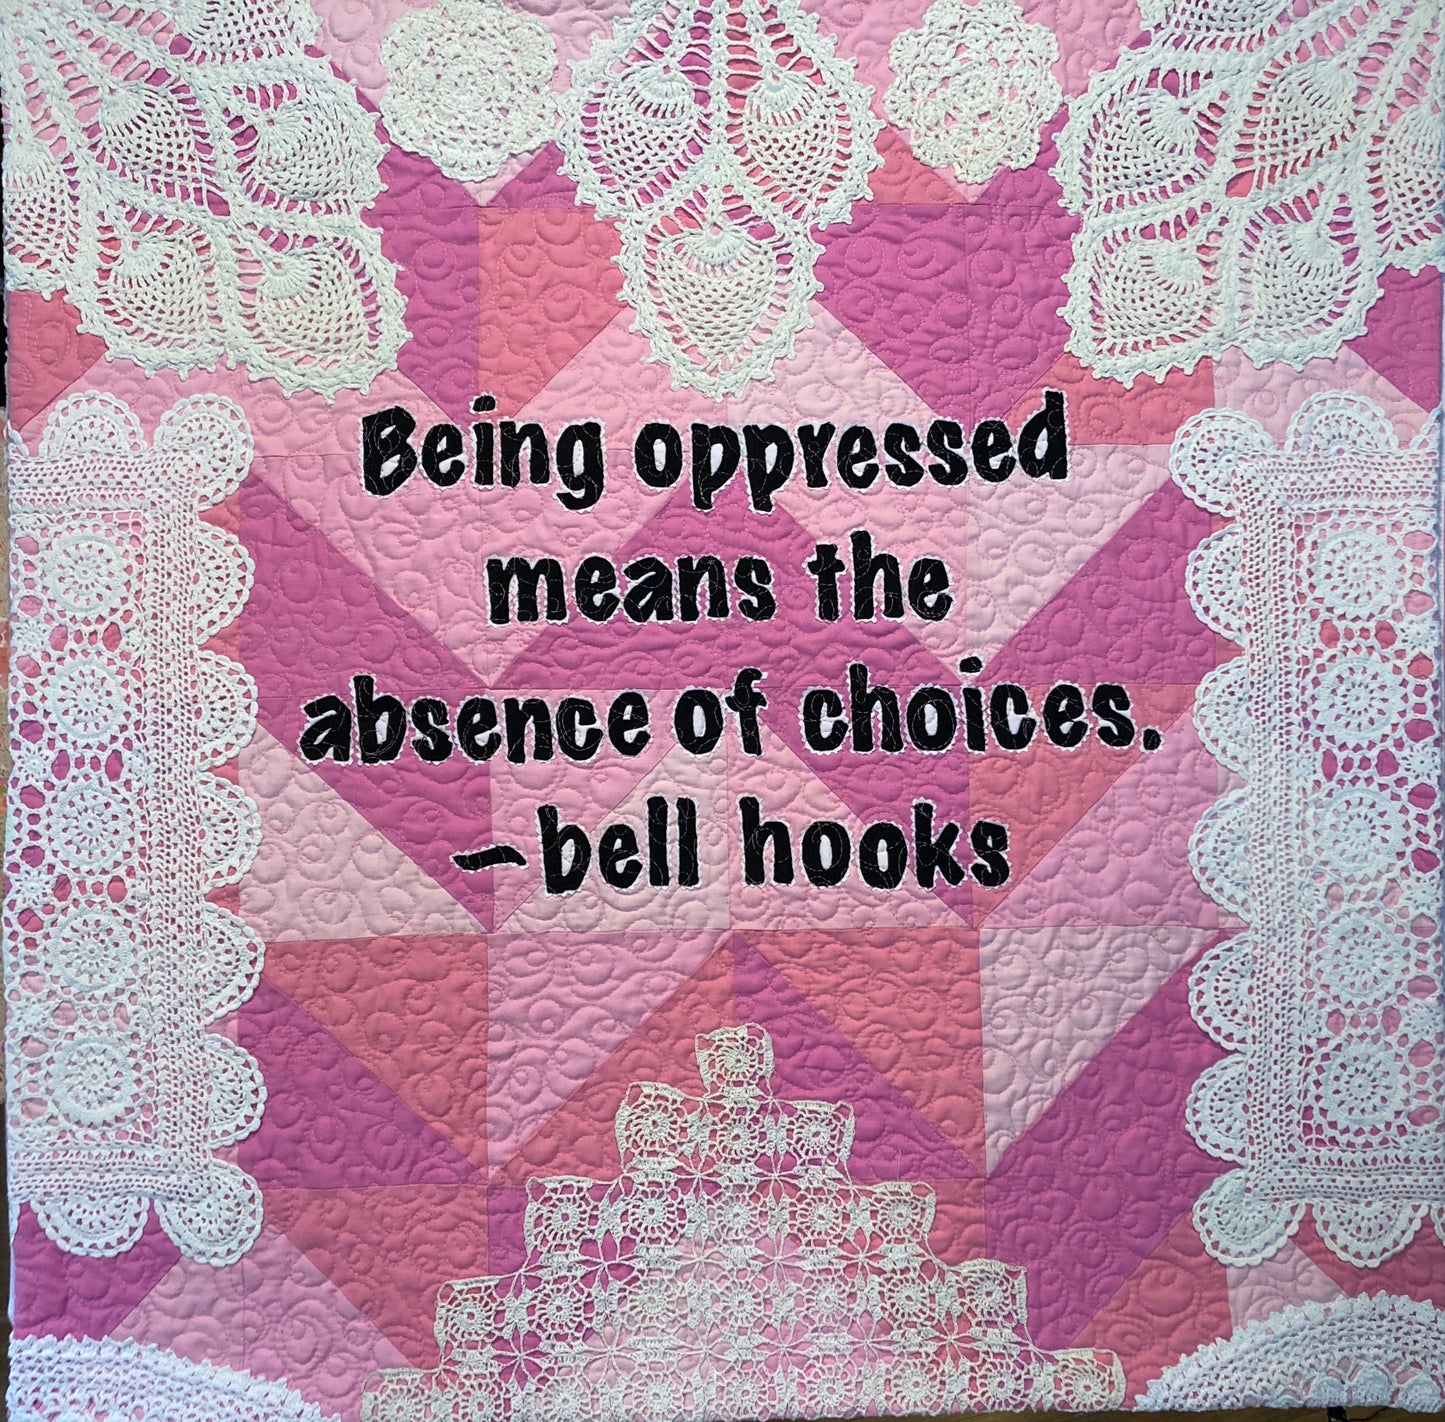 Women’s Work Abortion Rights Series: Being oppressed